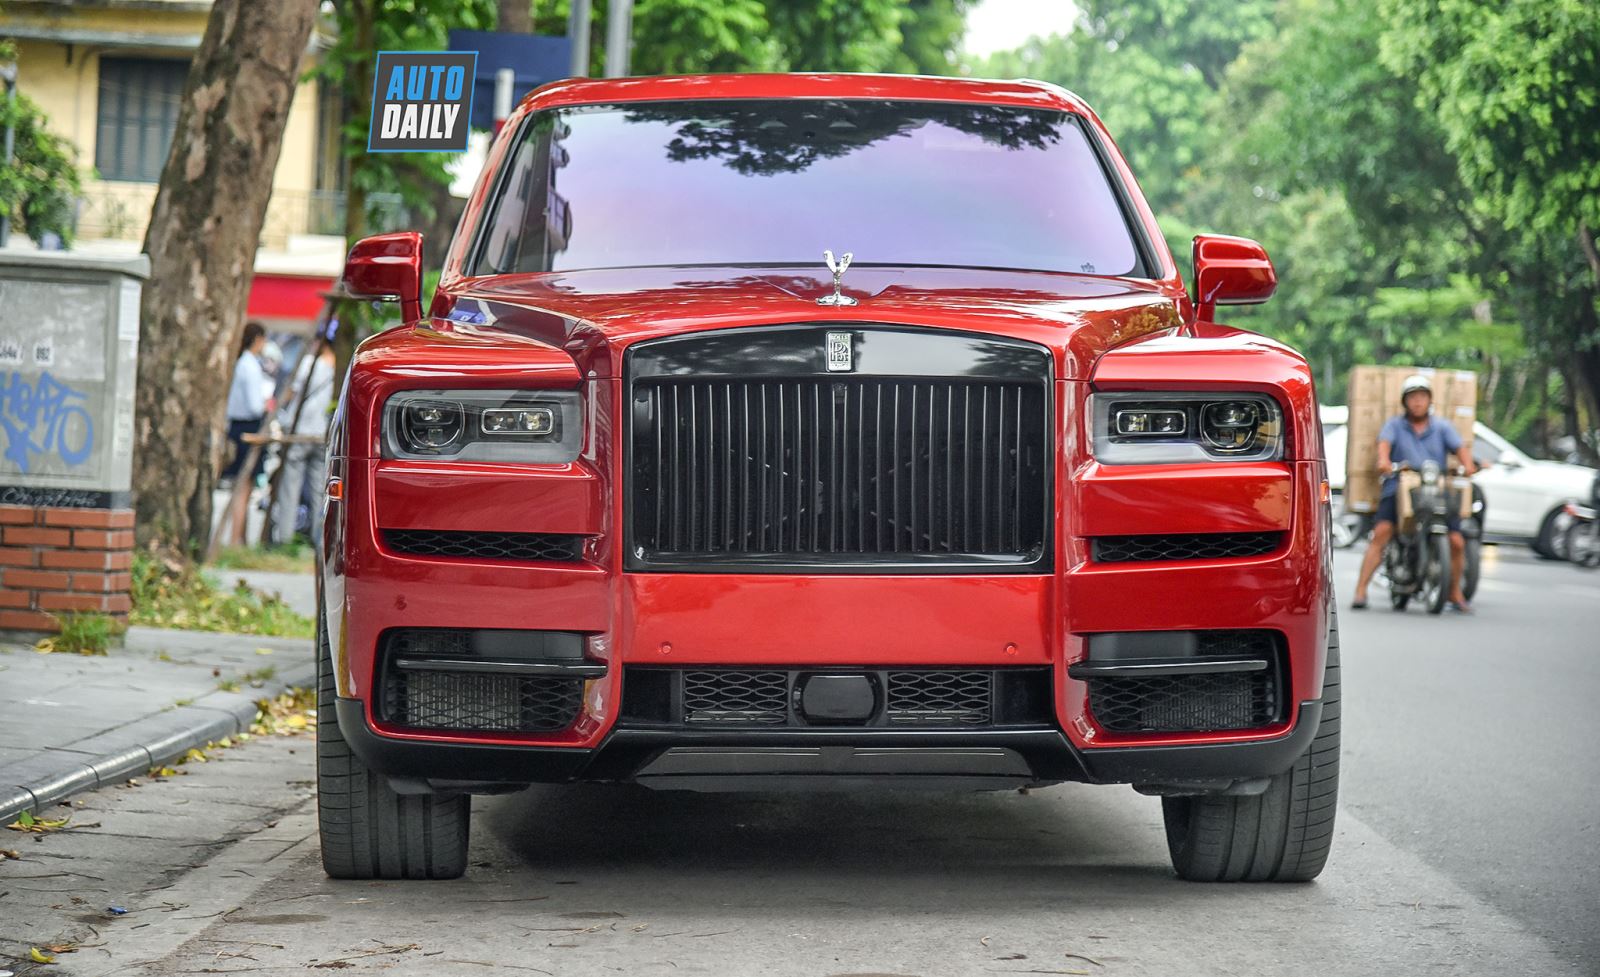 Matte Red Mansory Phantom  Rides Magazine  Luxury cars rolls royce Rolls  royce Rolls royce cars